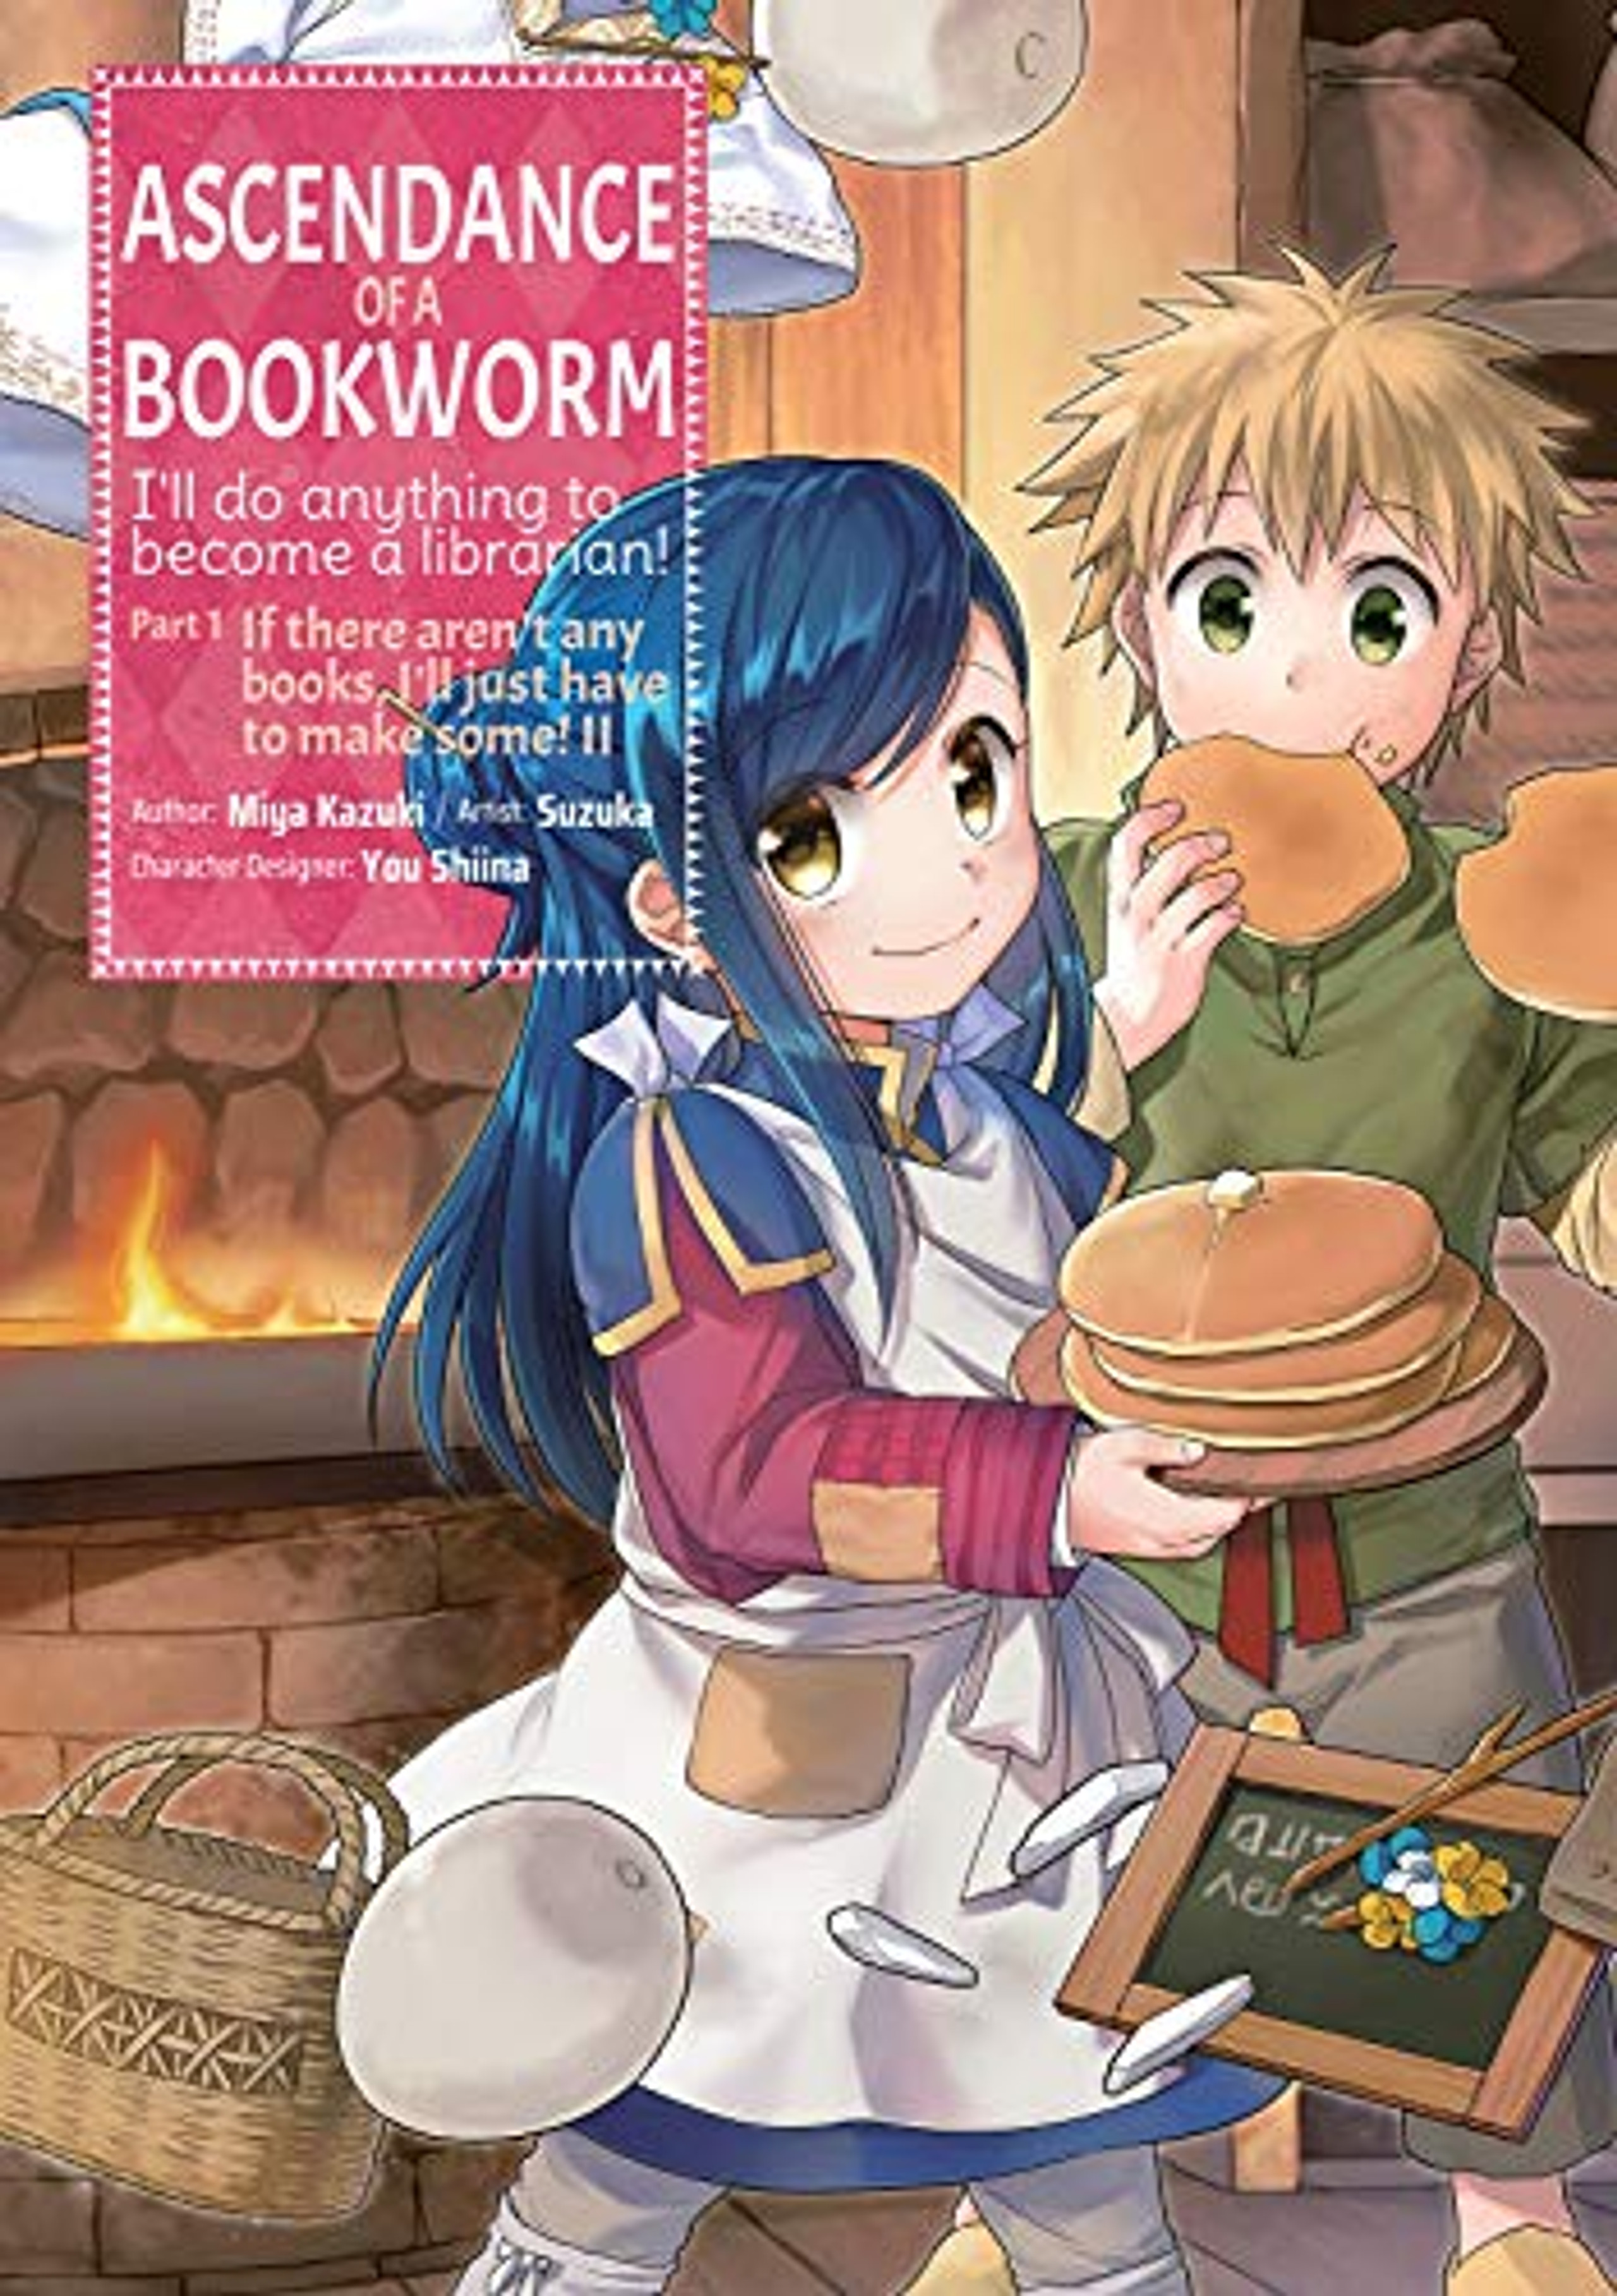 Ascendance Of A Bookworm Manga Part 1 Volume 2 Ascendance Of A Bookworm Manga Part 1 2 